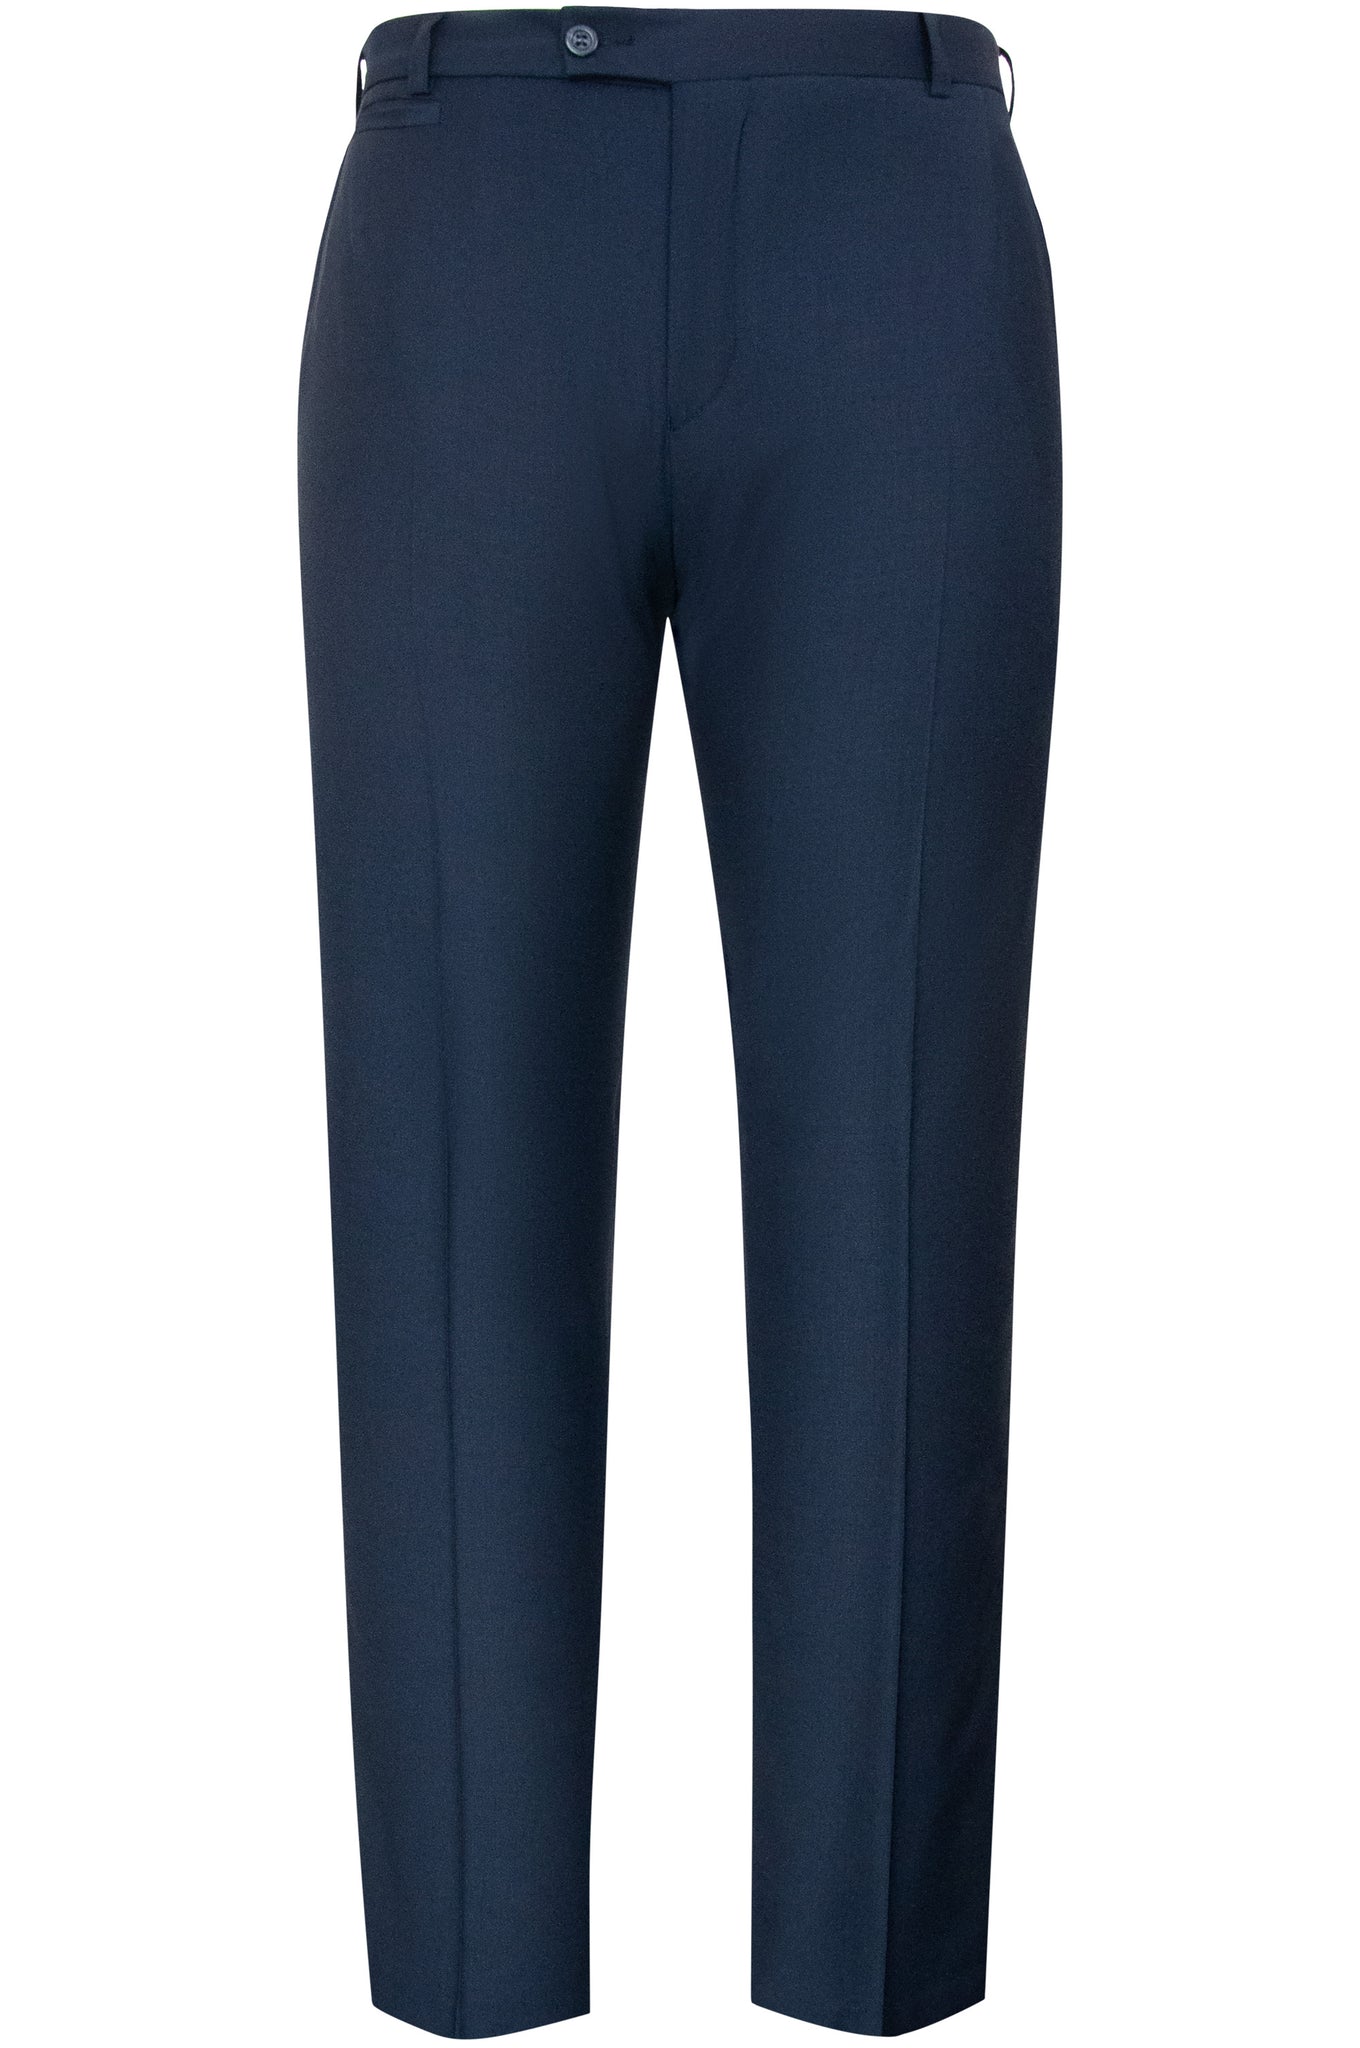 William Hunt Savile Row Navy Blue Trousers